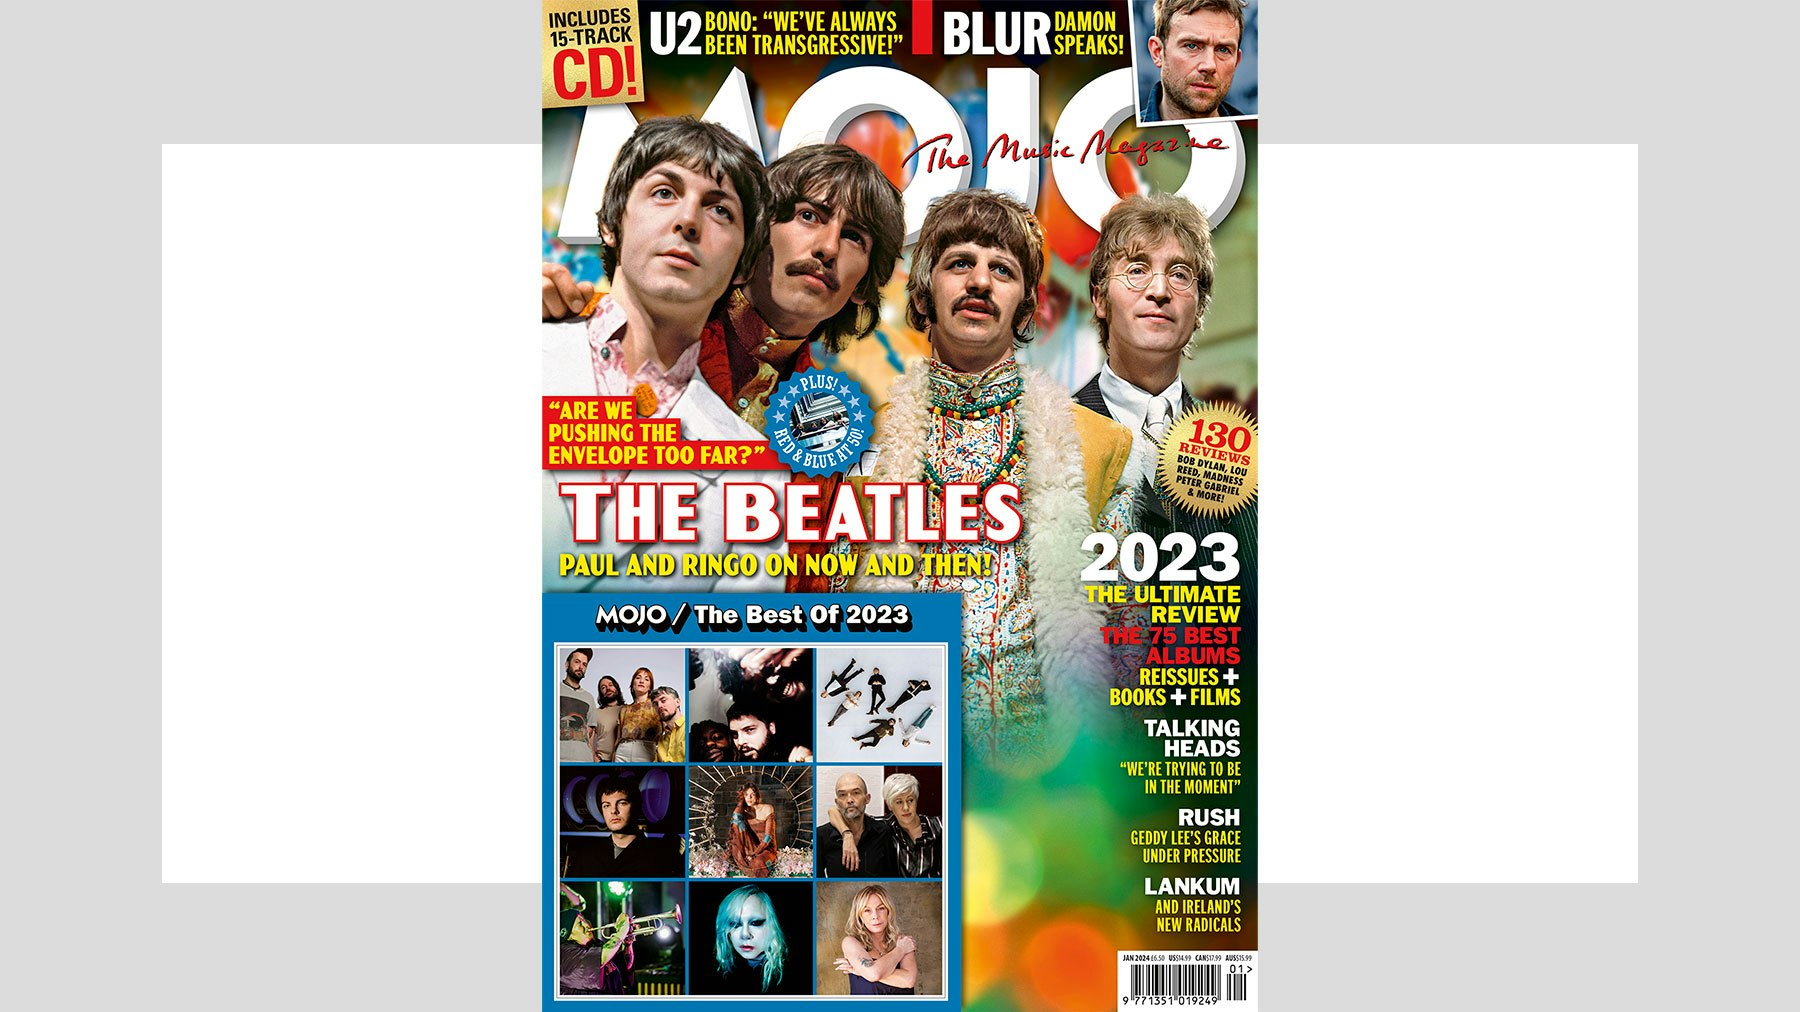 The Beatles Speak! Best Albums Of 2023 & More In New MOJO